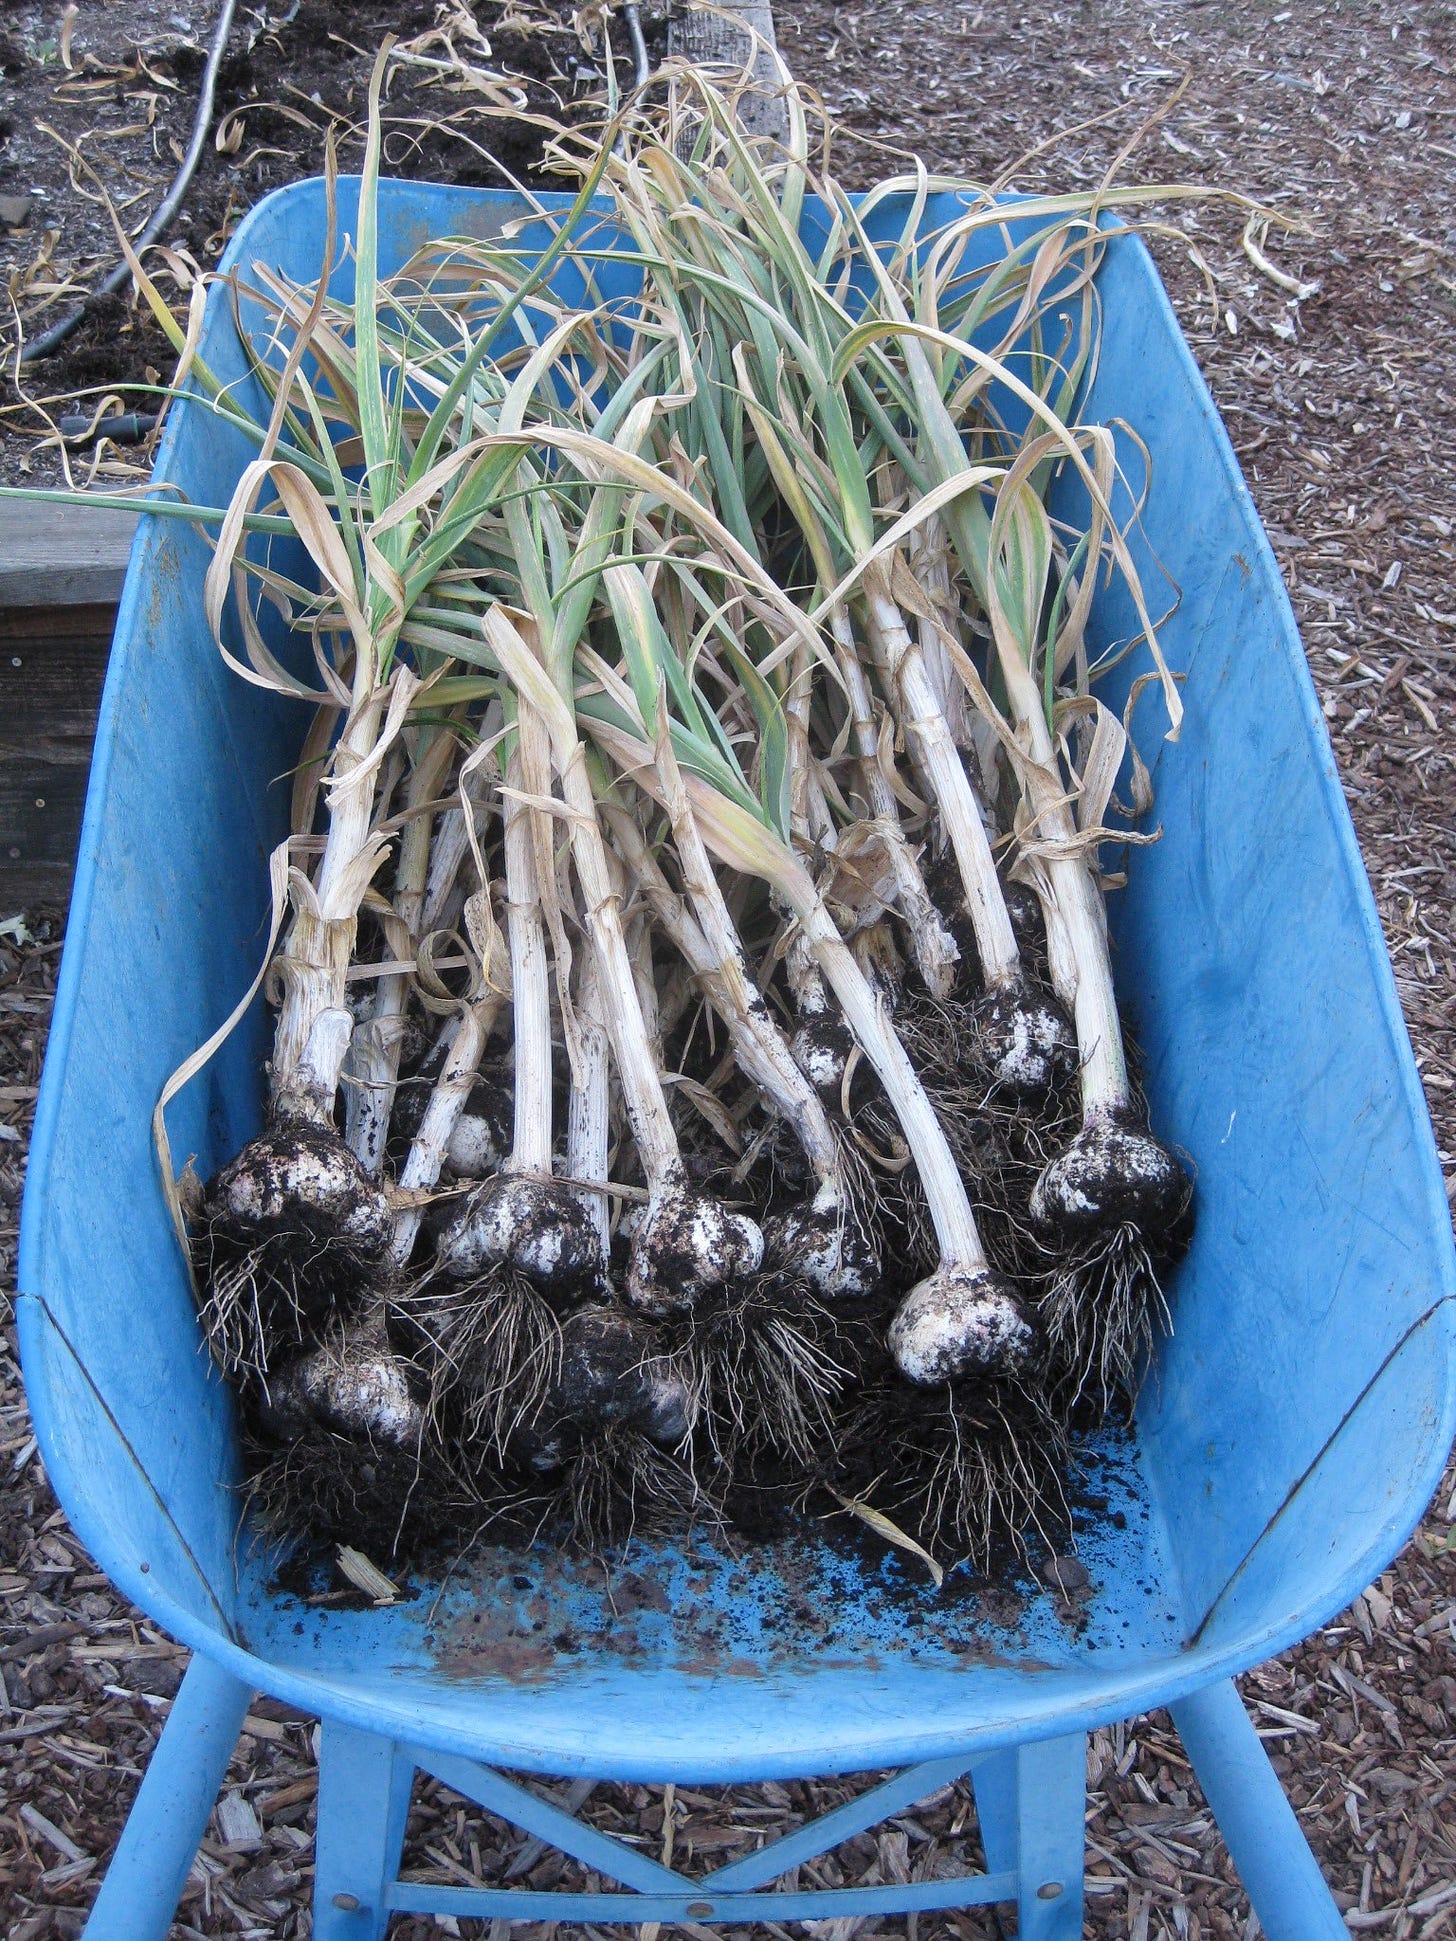 Garlic in a wheelbarrow